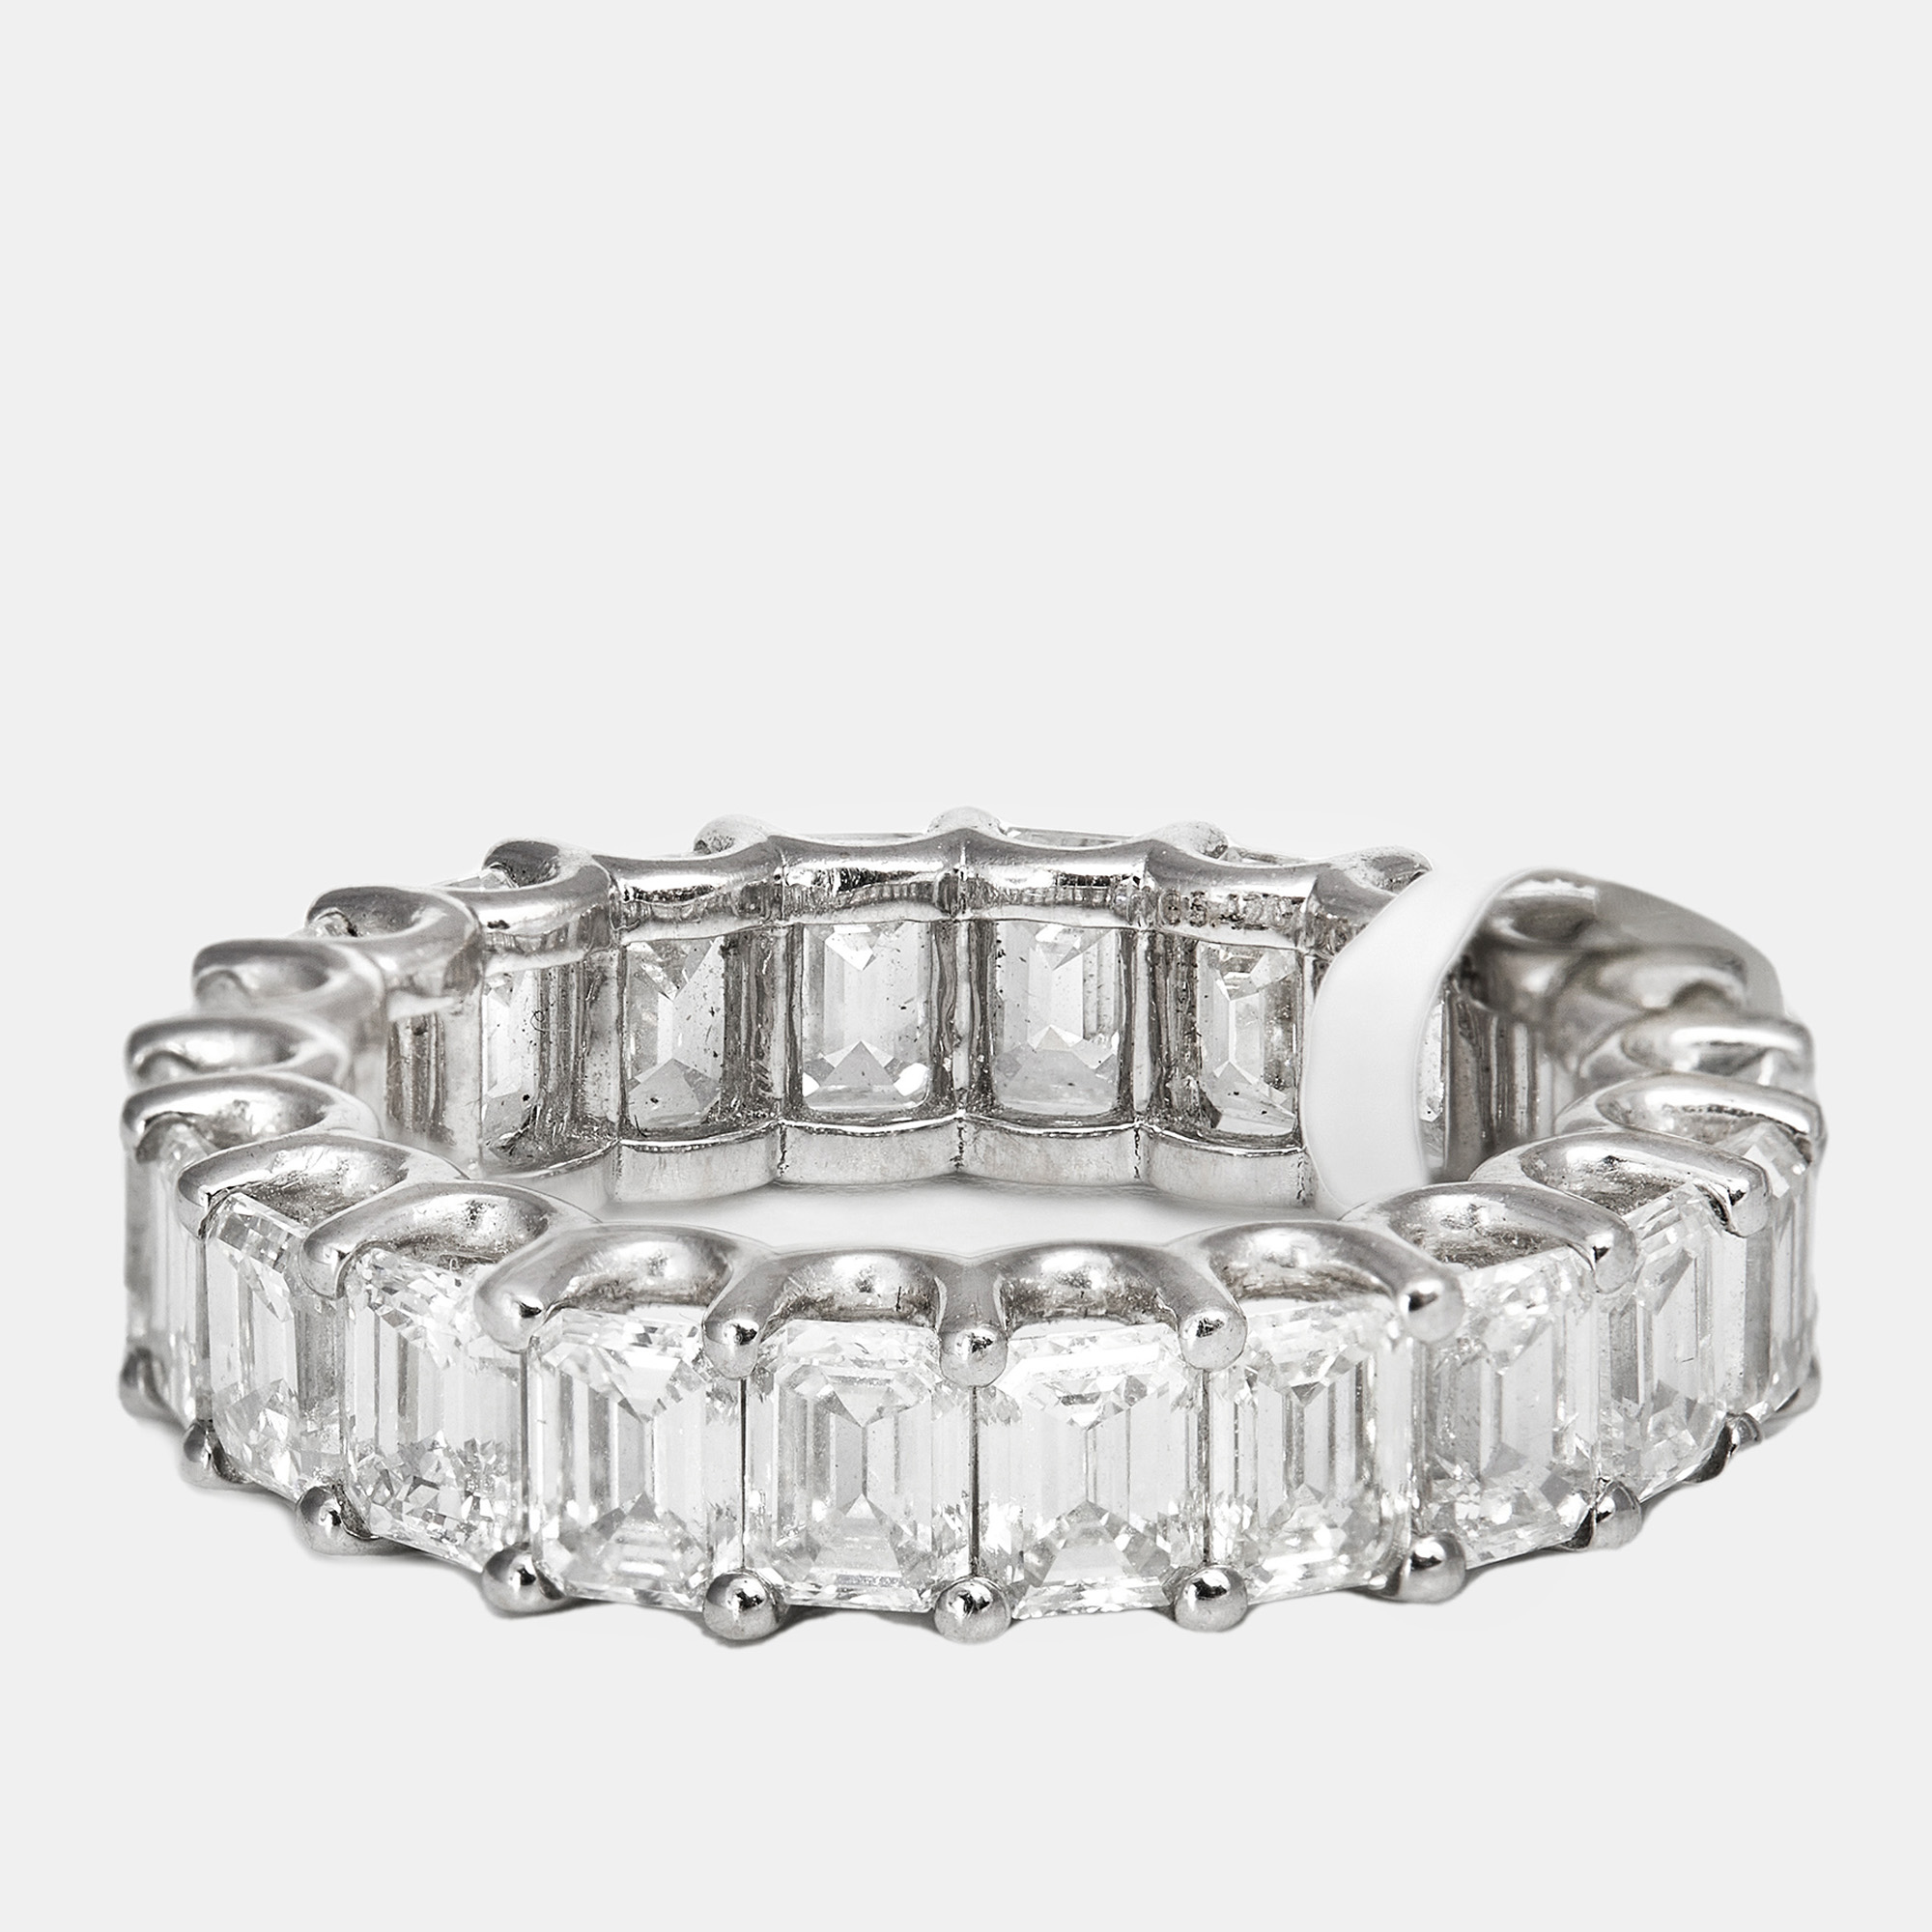 The diamond edit elegant emerald cut diamond 5.82 cts 18k white gold eternity ring size 54